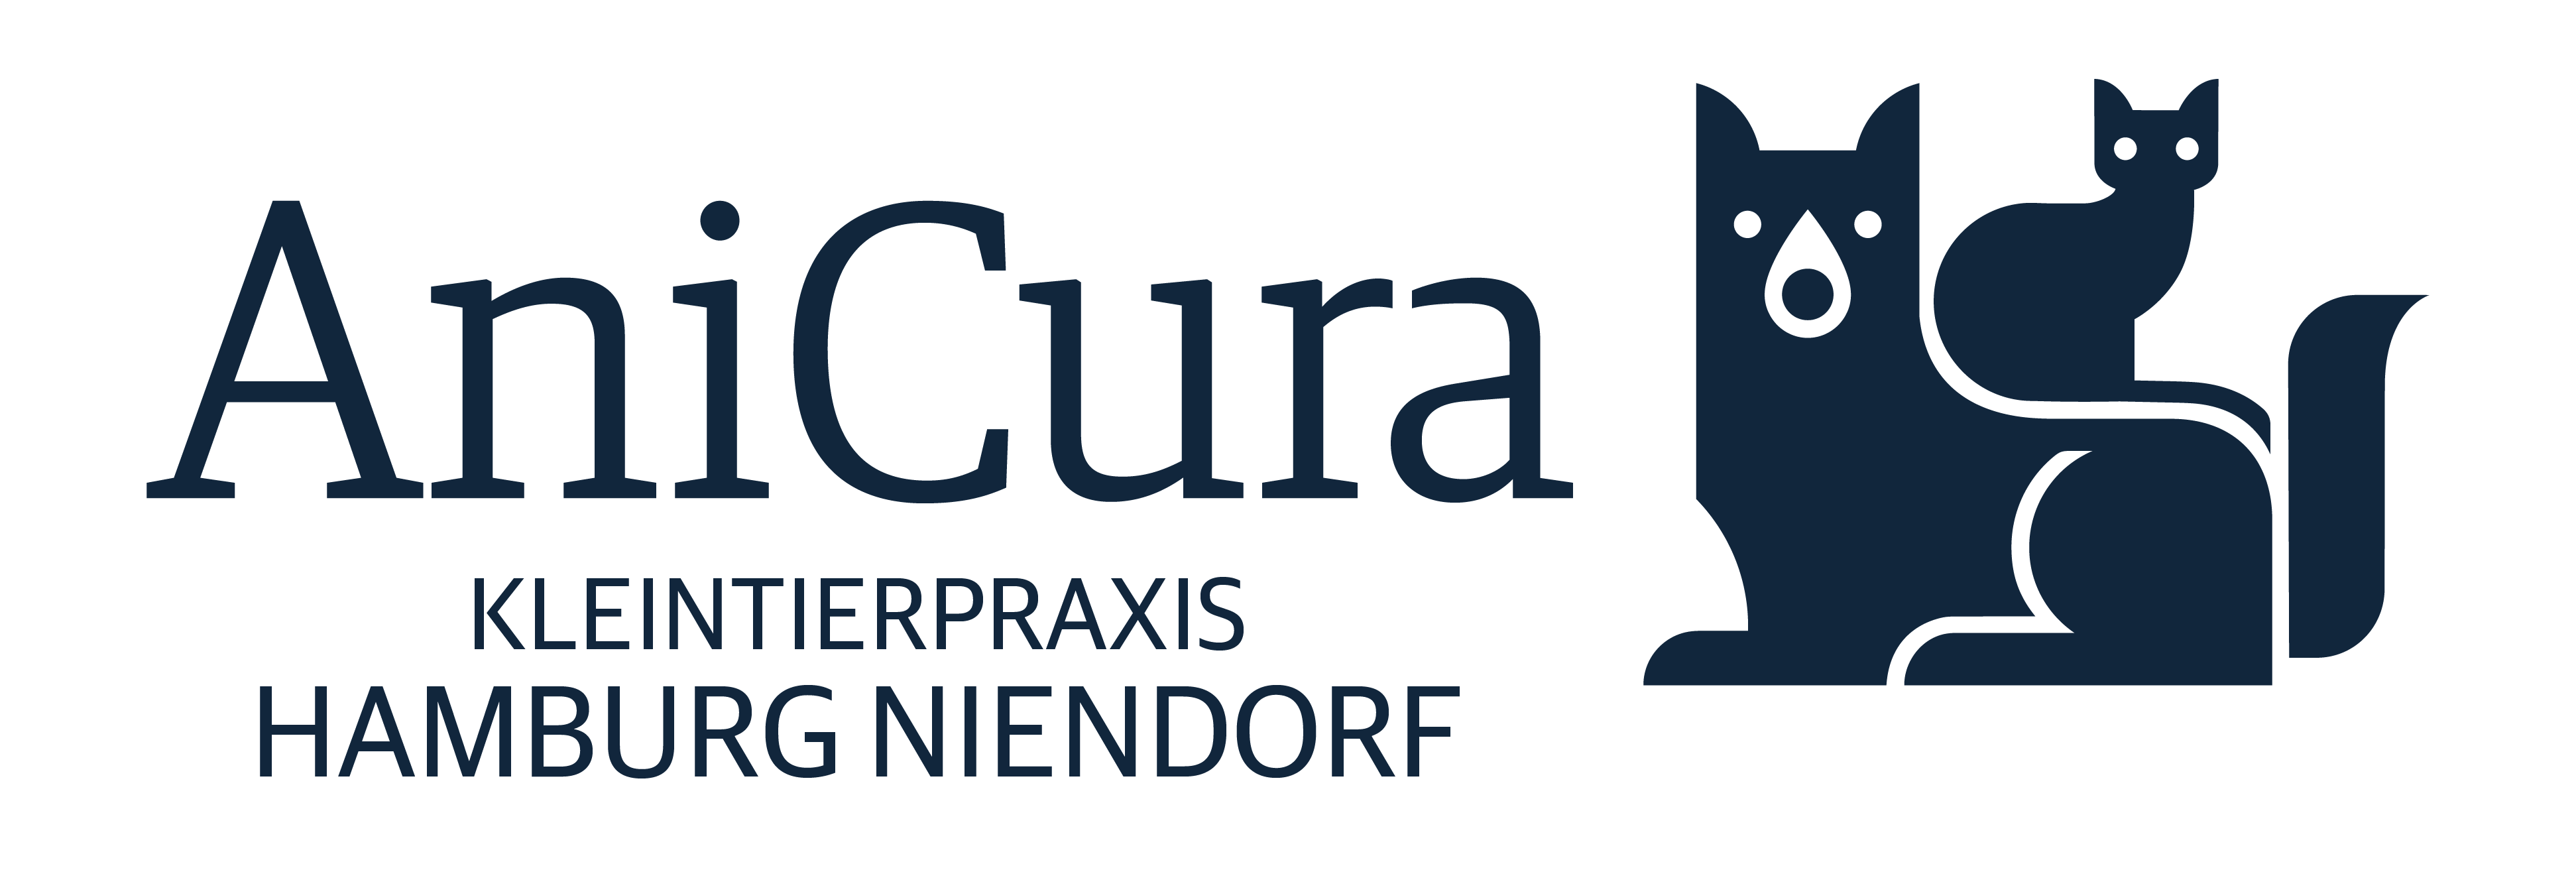 AniCura Hamburg Niendorf logo